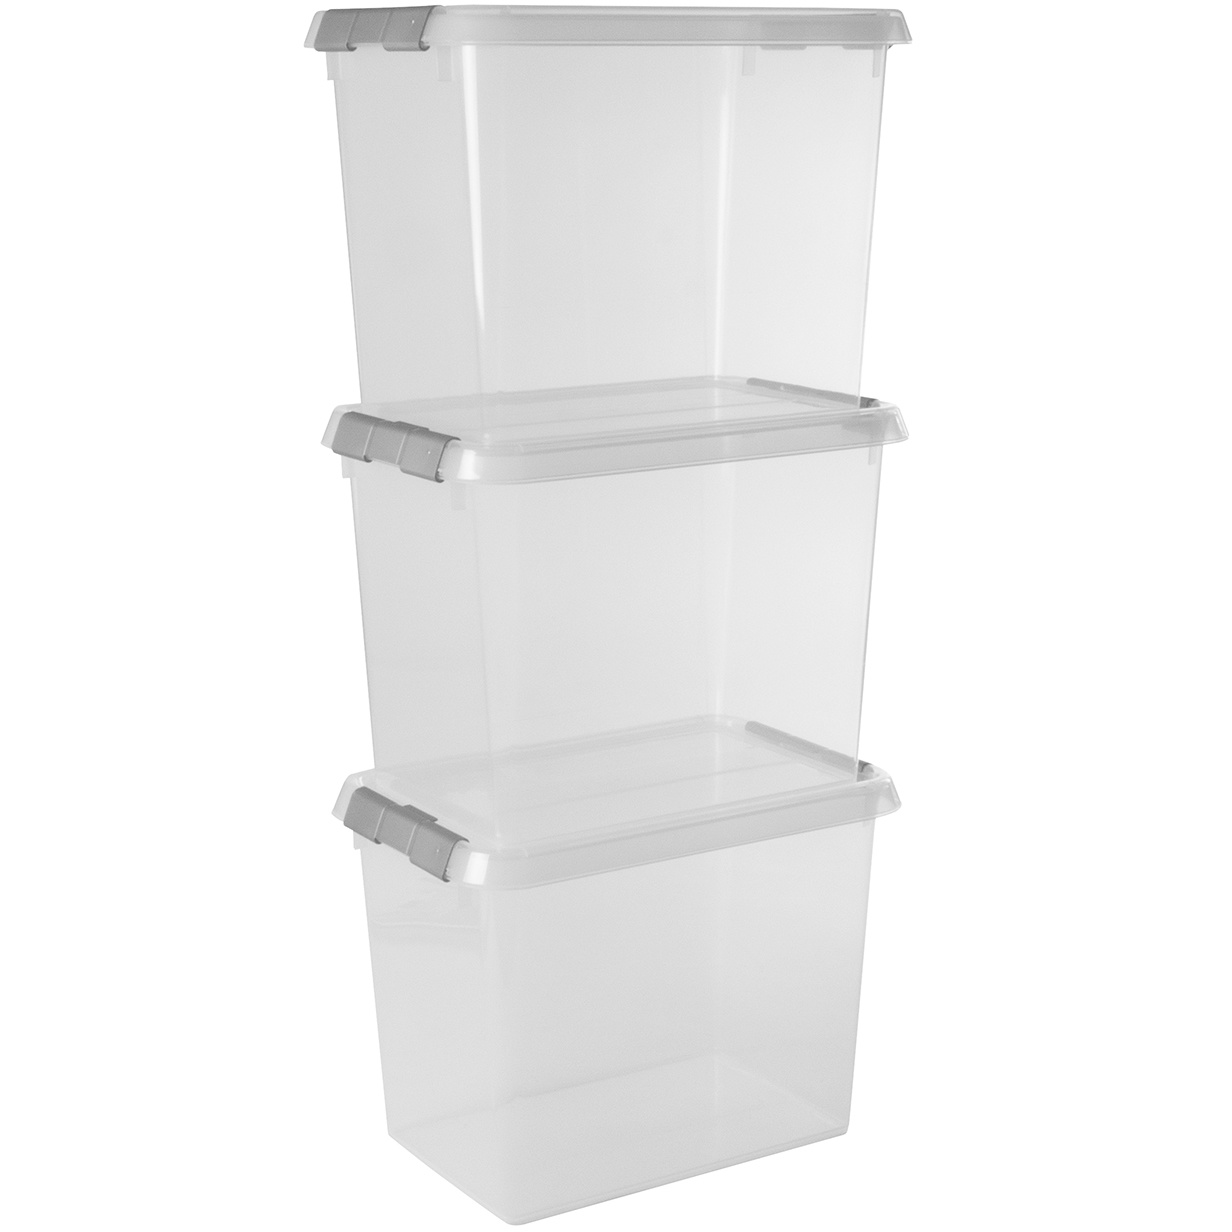 Comfort line storage box set of 3 - 9L transparent metallic